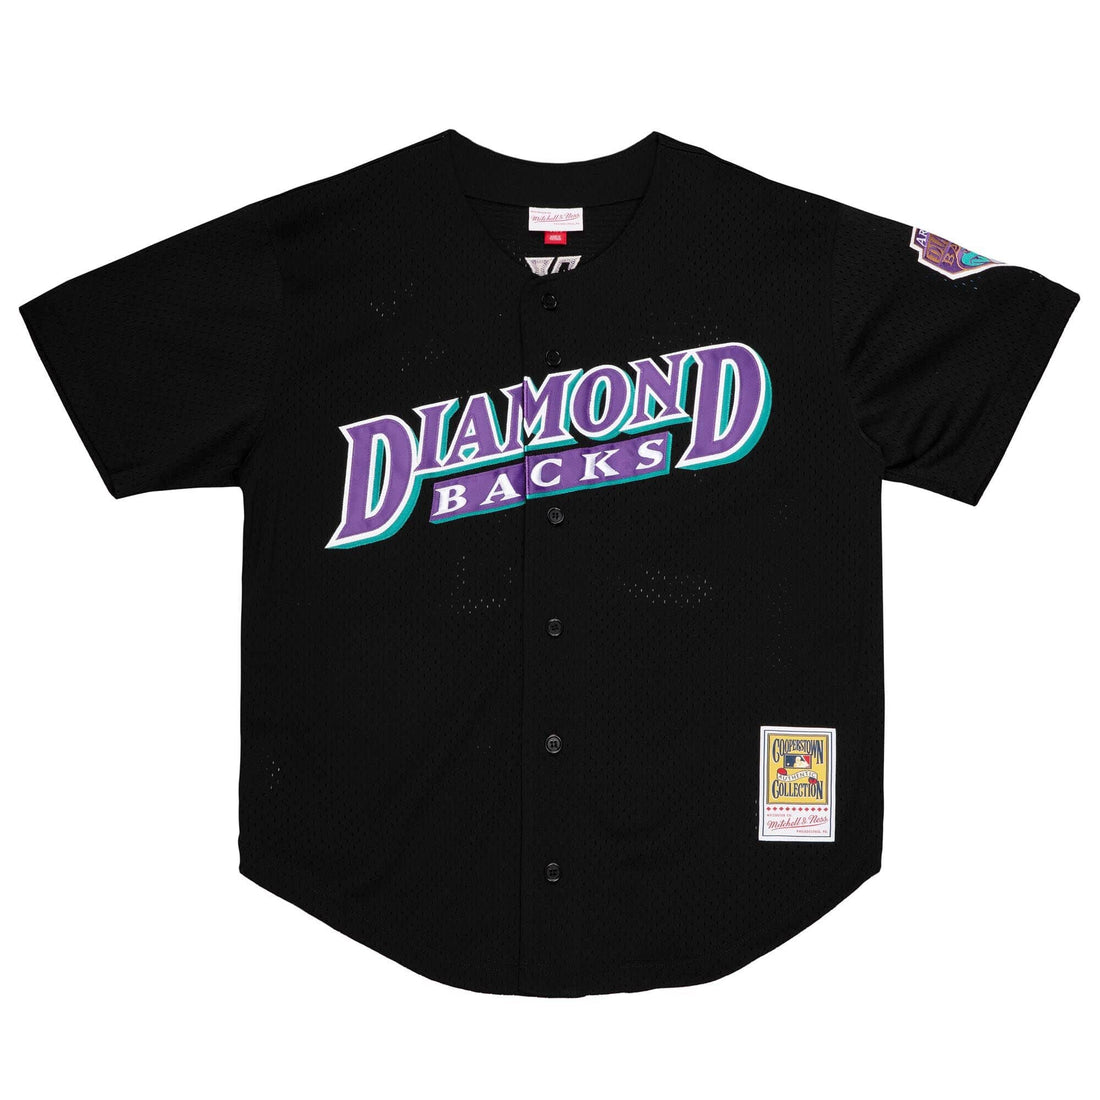 Mitchell & Ness MLB Authentic Randy Johnson Arizona Diamondbacks 1999 BP Button Front Jersey (Black)